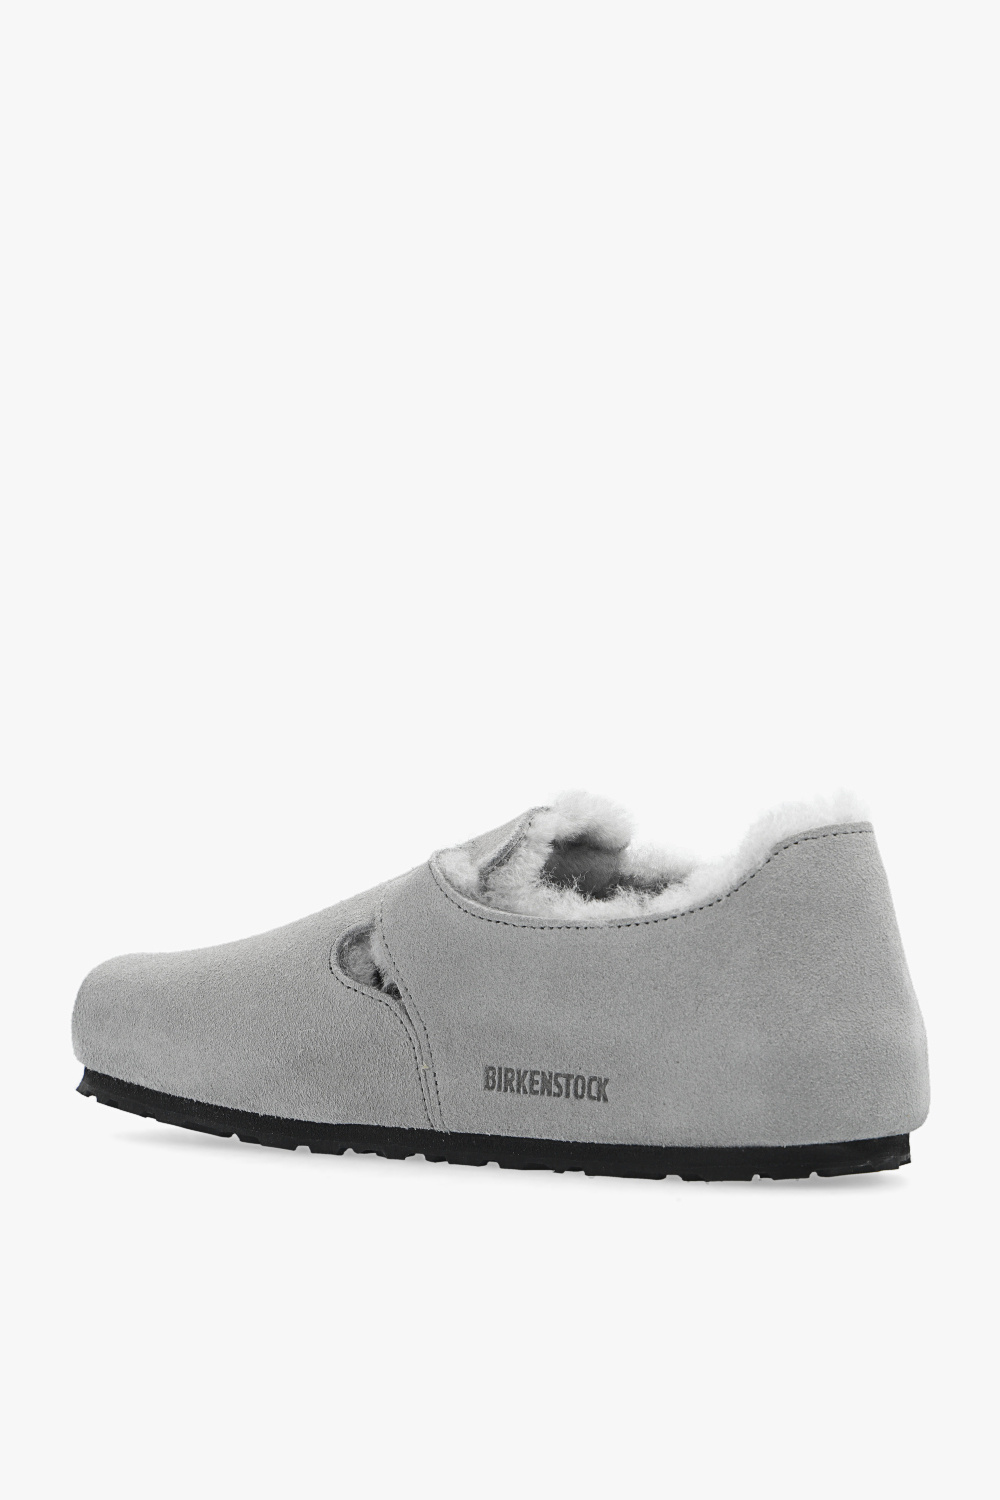 Birkenstock 'London Shearling' suede shoes | Men's Shoes | Vitkac